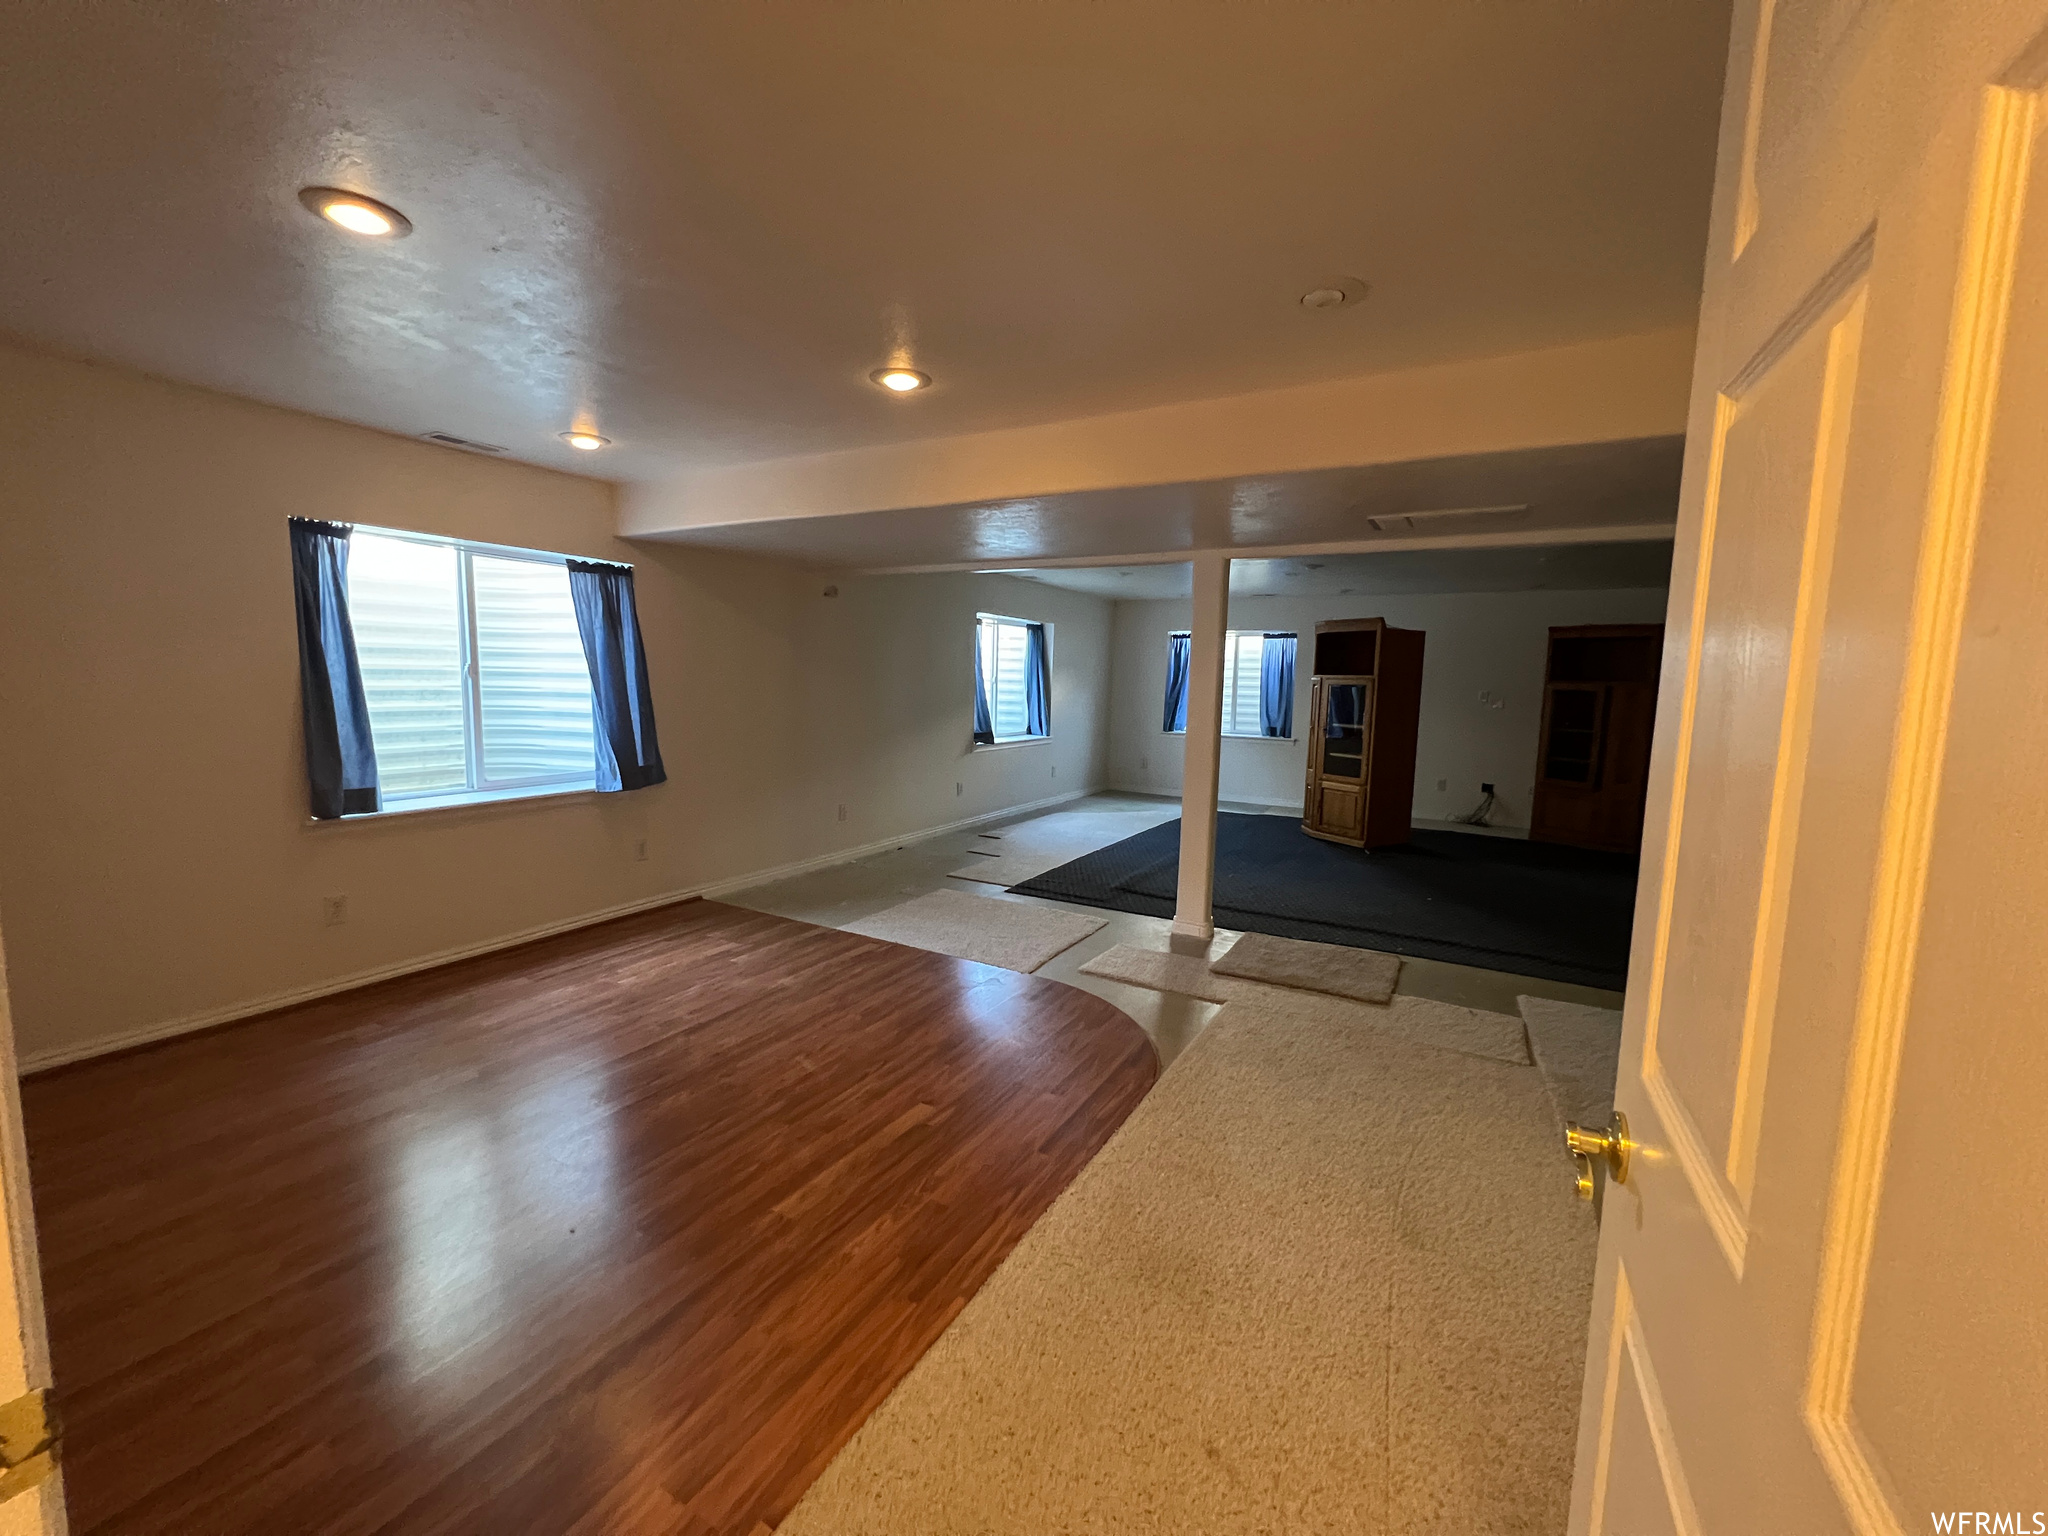 Interior space with hardwood flooring